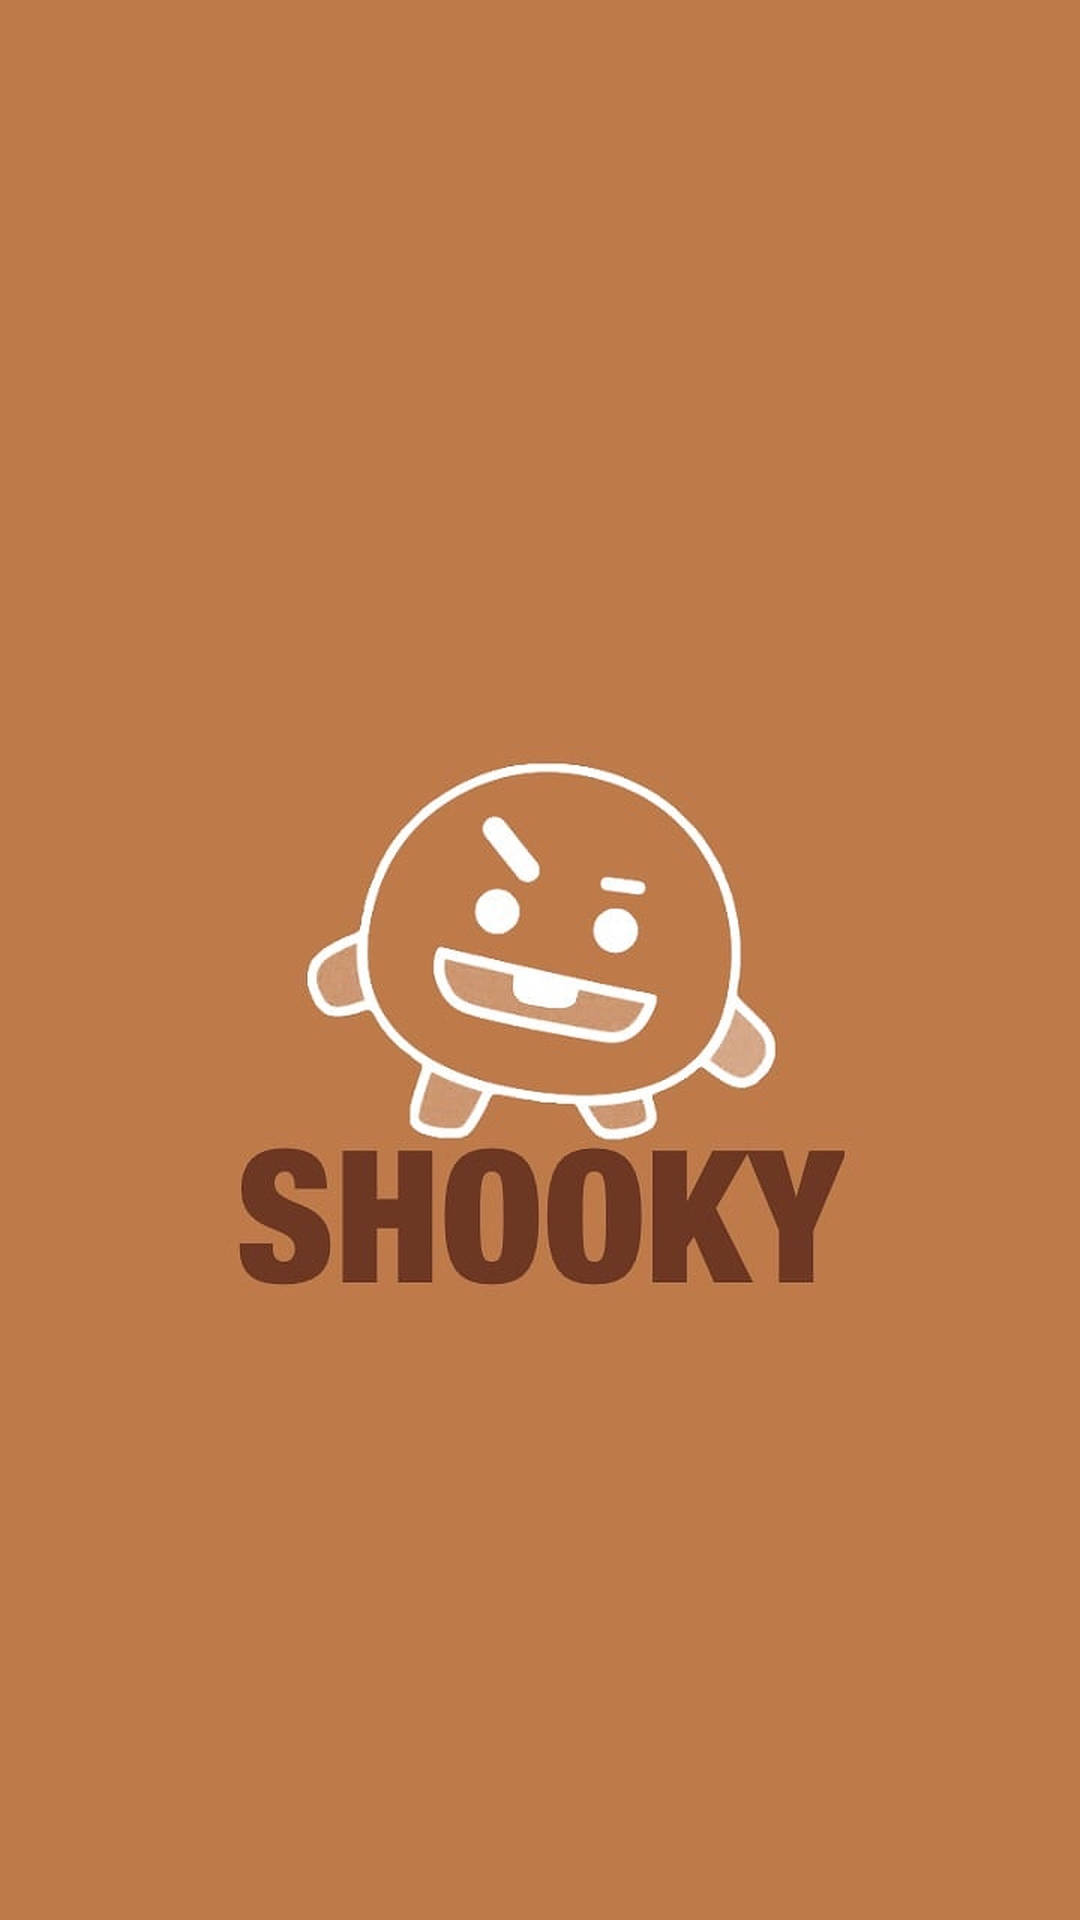 Shooky Bt21 Line Art Background